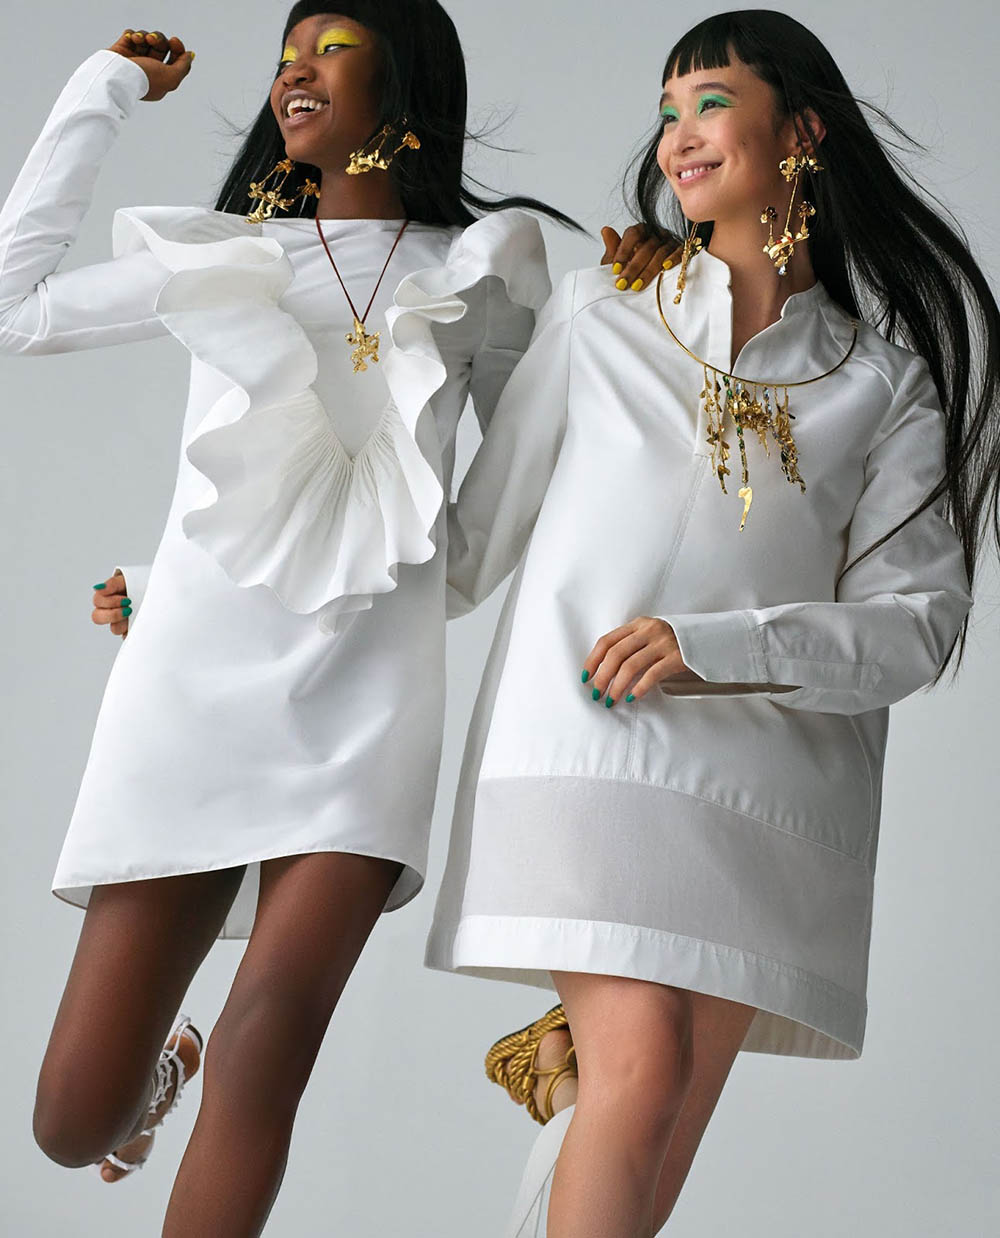 Eniola Abioro and Yuka Mannami by Daniel Clavero for Elle US January 2020